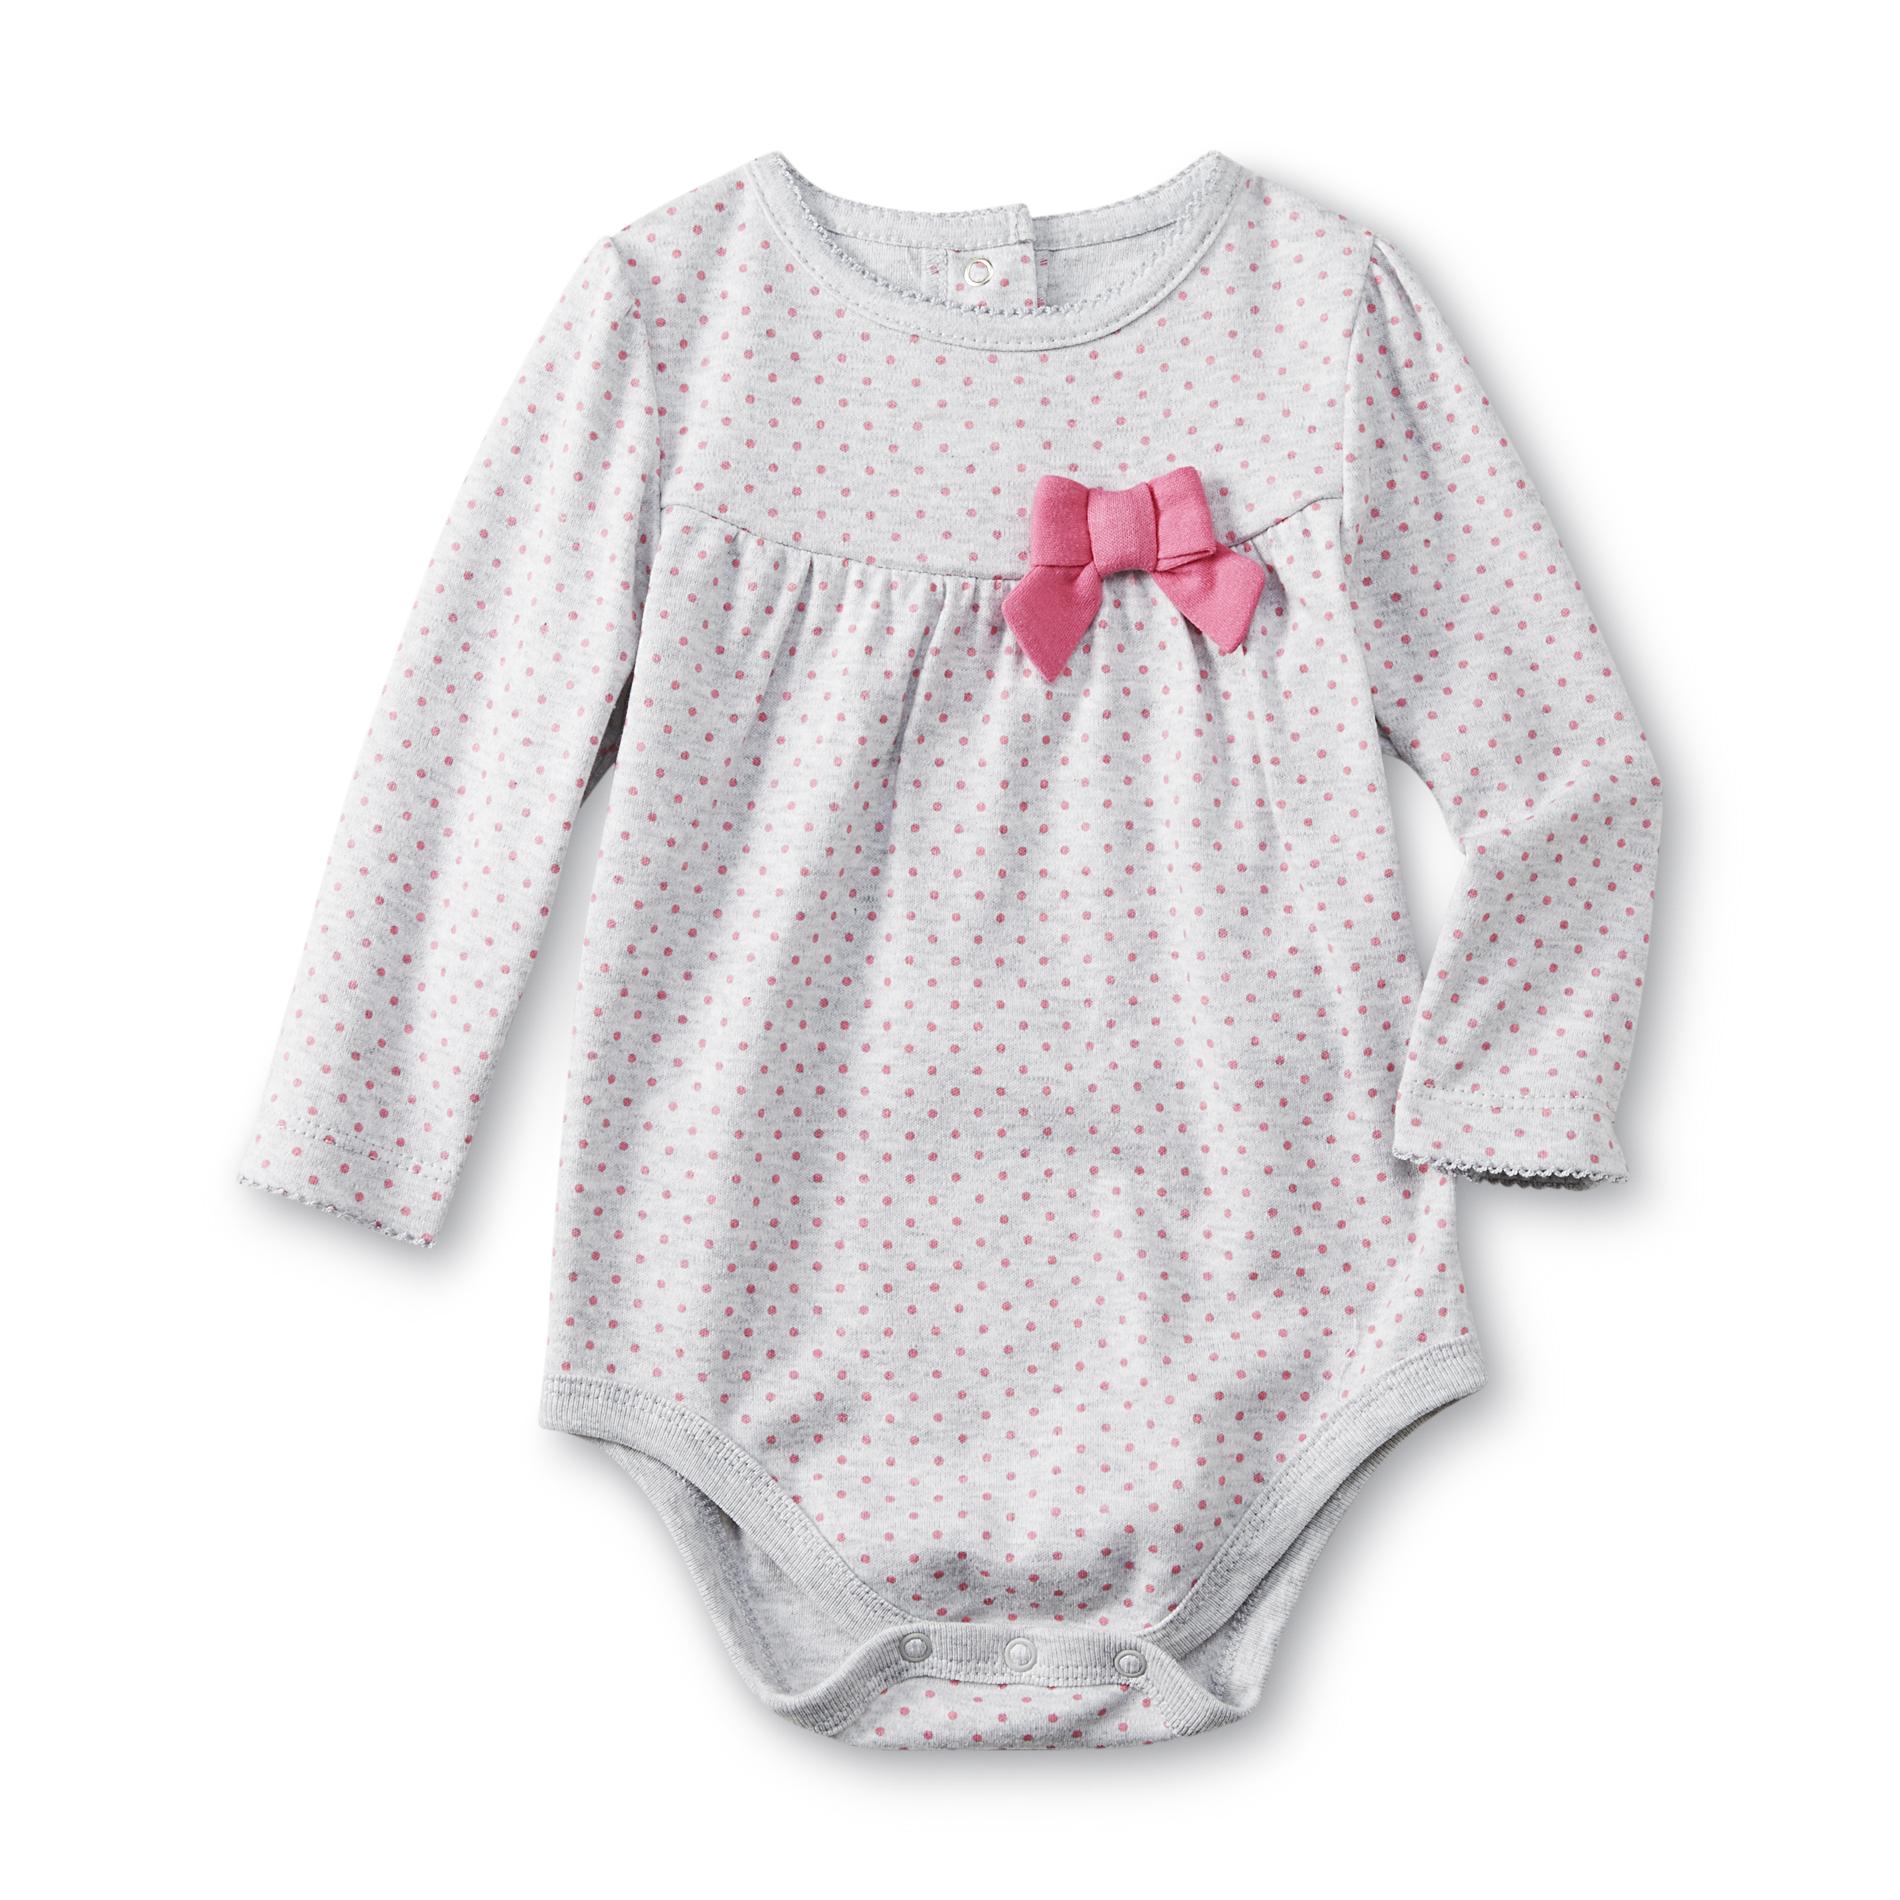 Small Wonders Newborn Girl's Long-Sleeve Bodysuit - Polka Dot